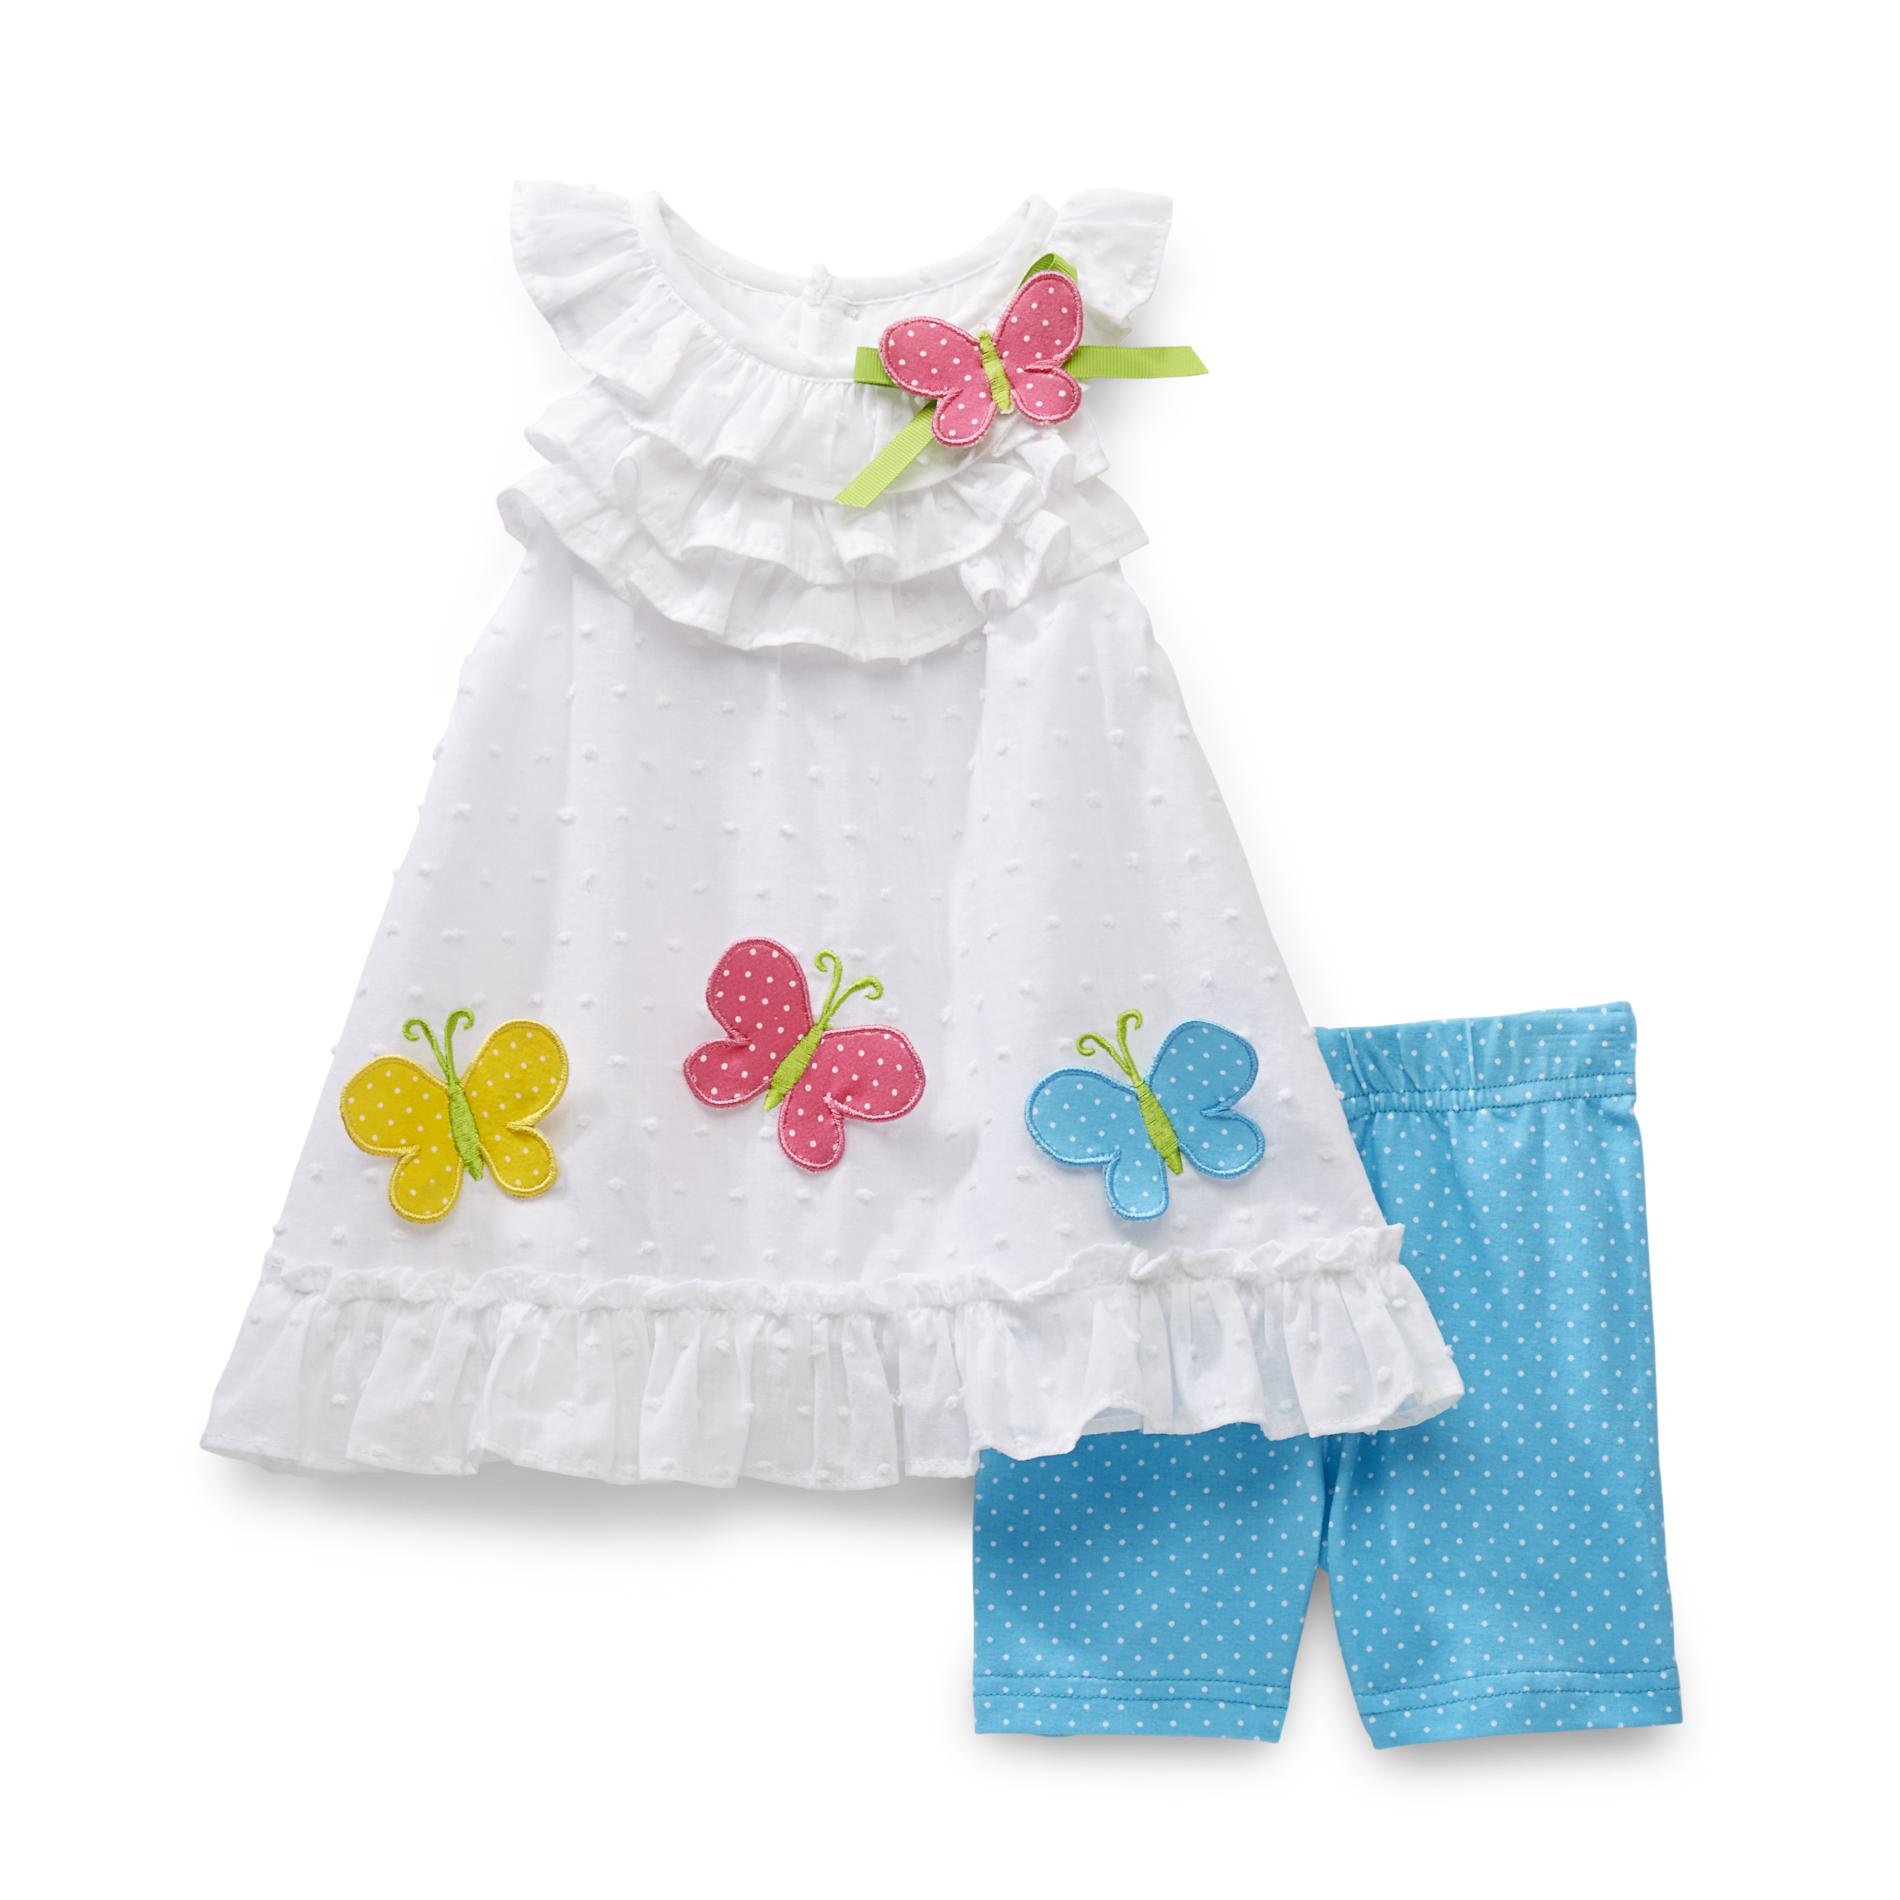 WonderKids Infant & Toddler Girl's Swiss Dot Top & Shorts - Butterfly